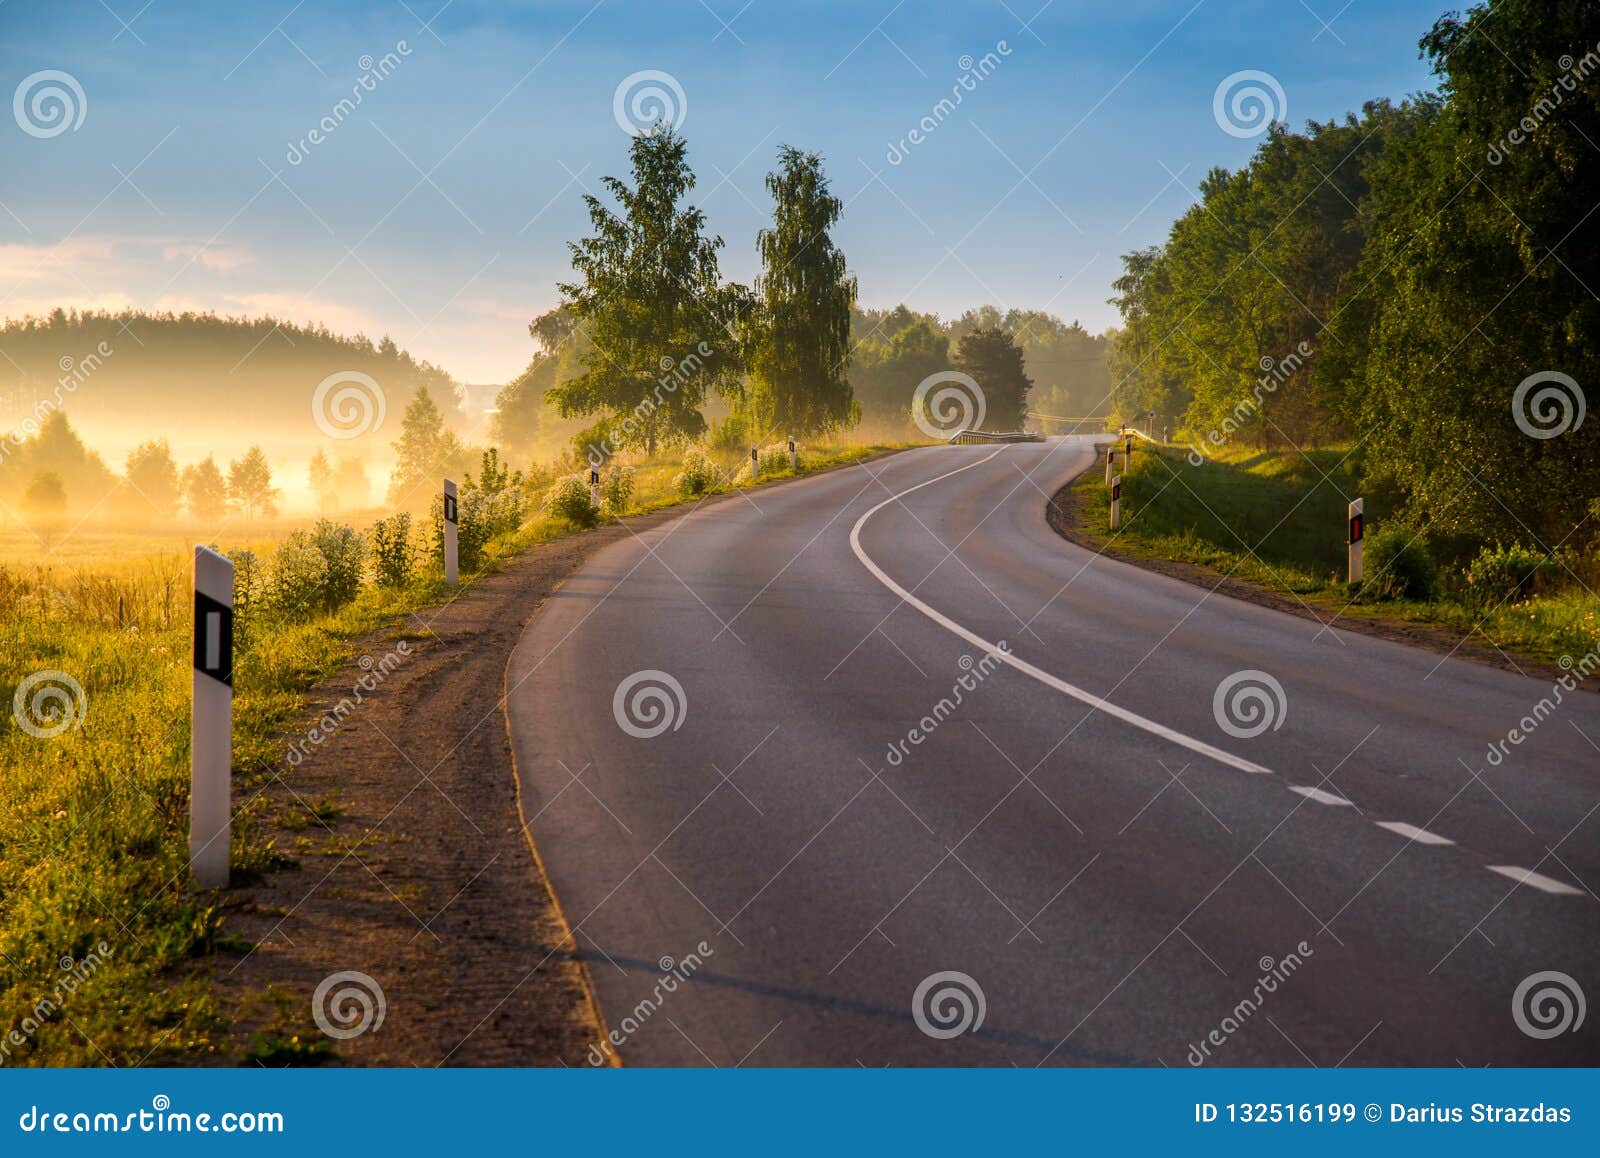 road curve at sunrise